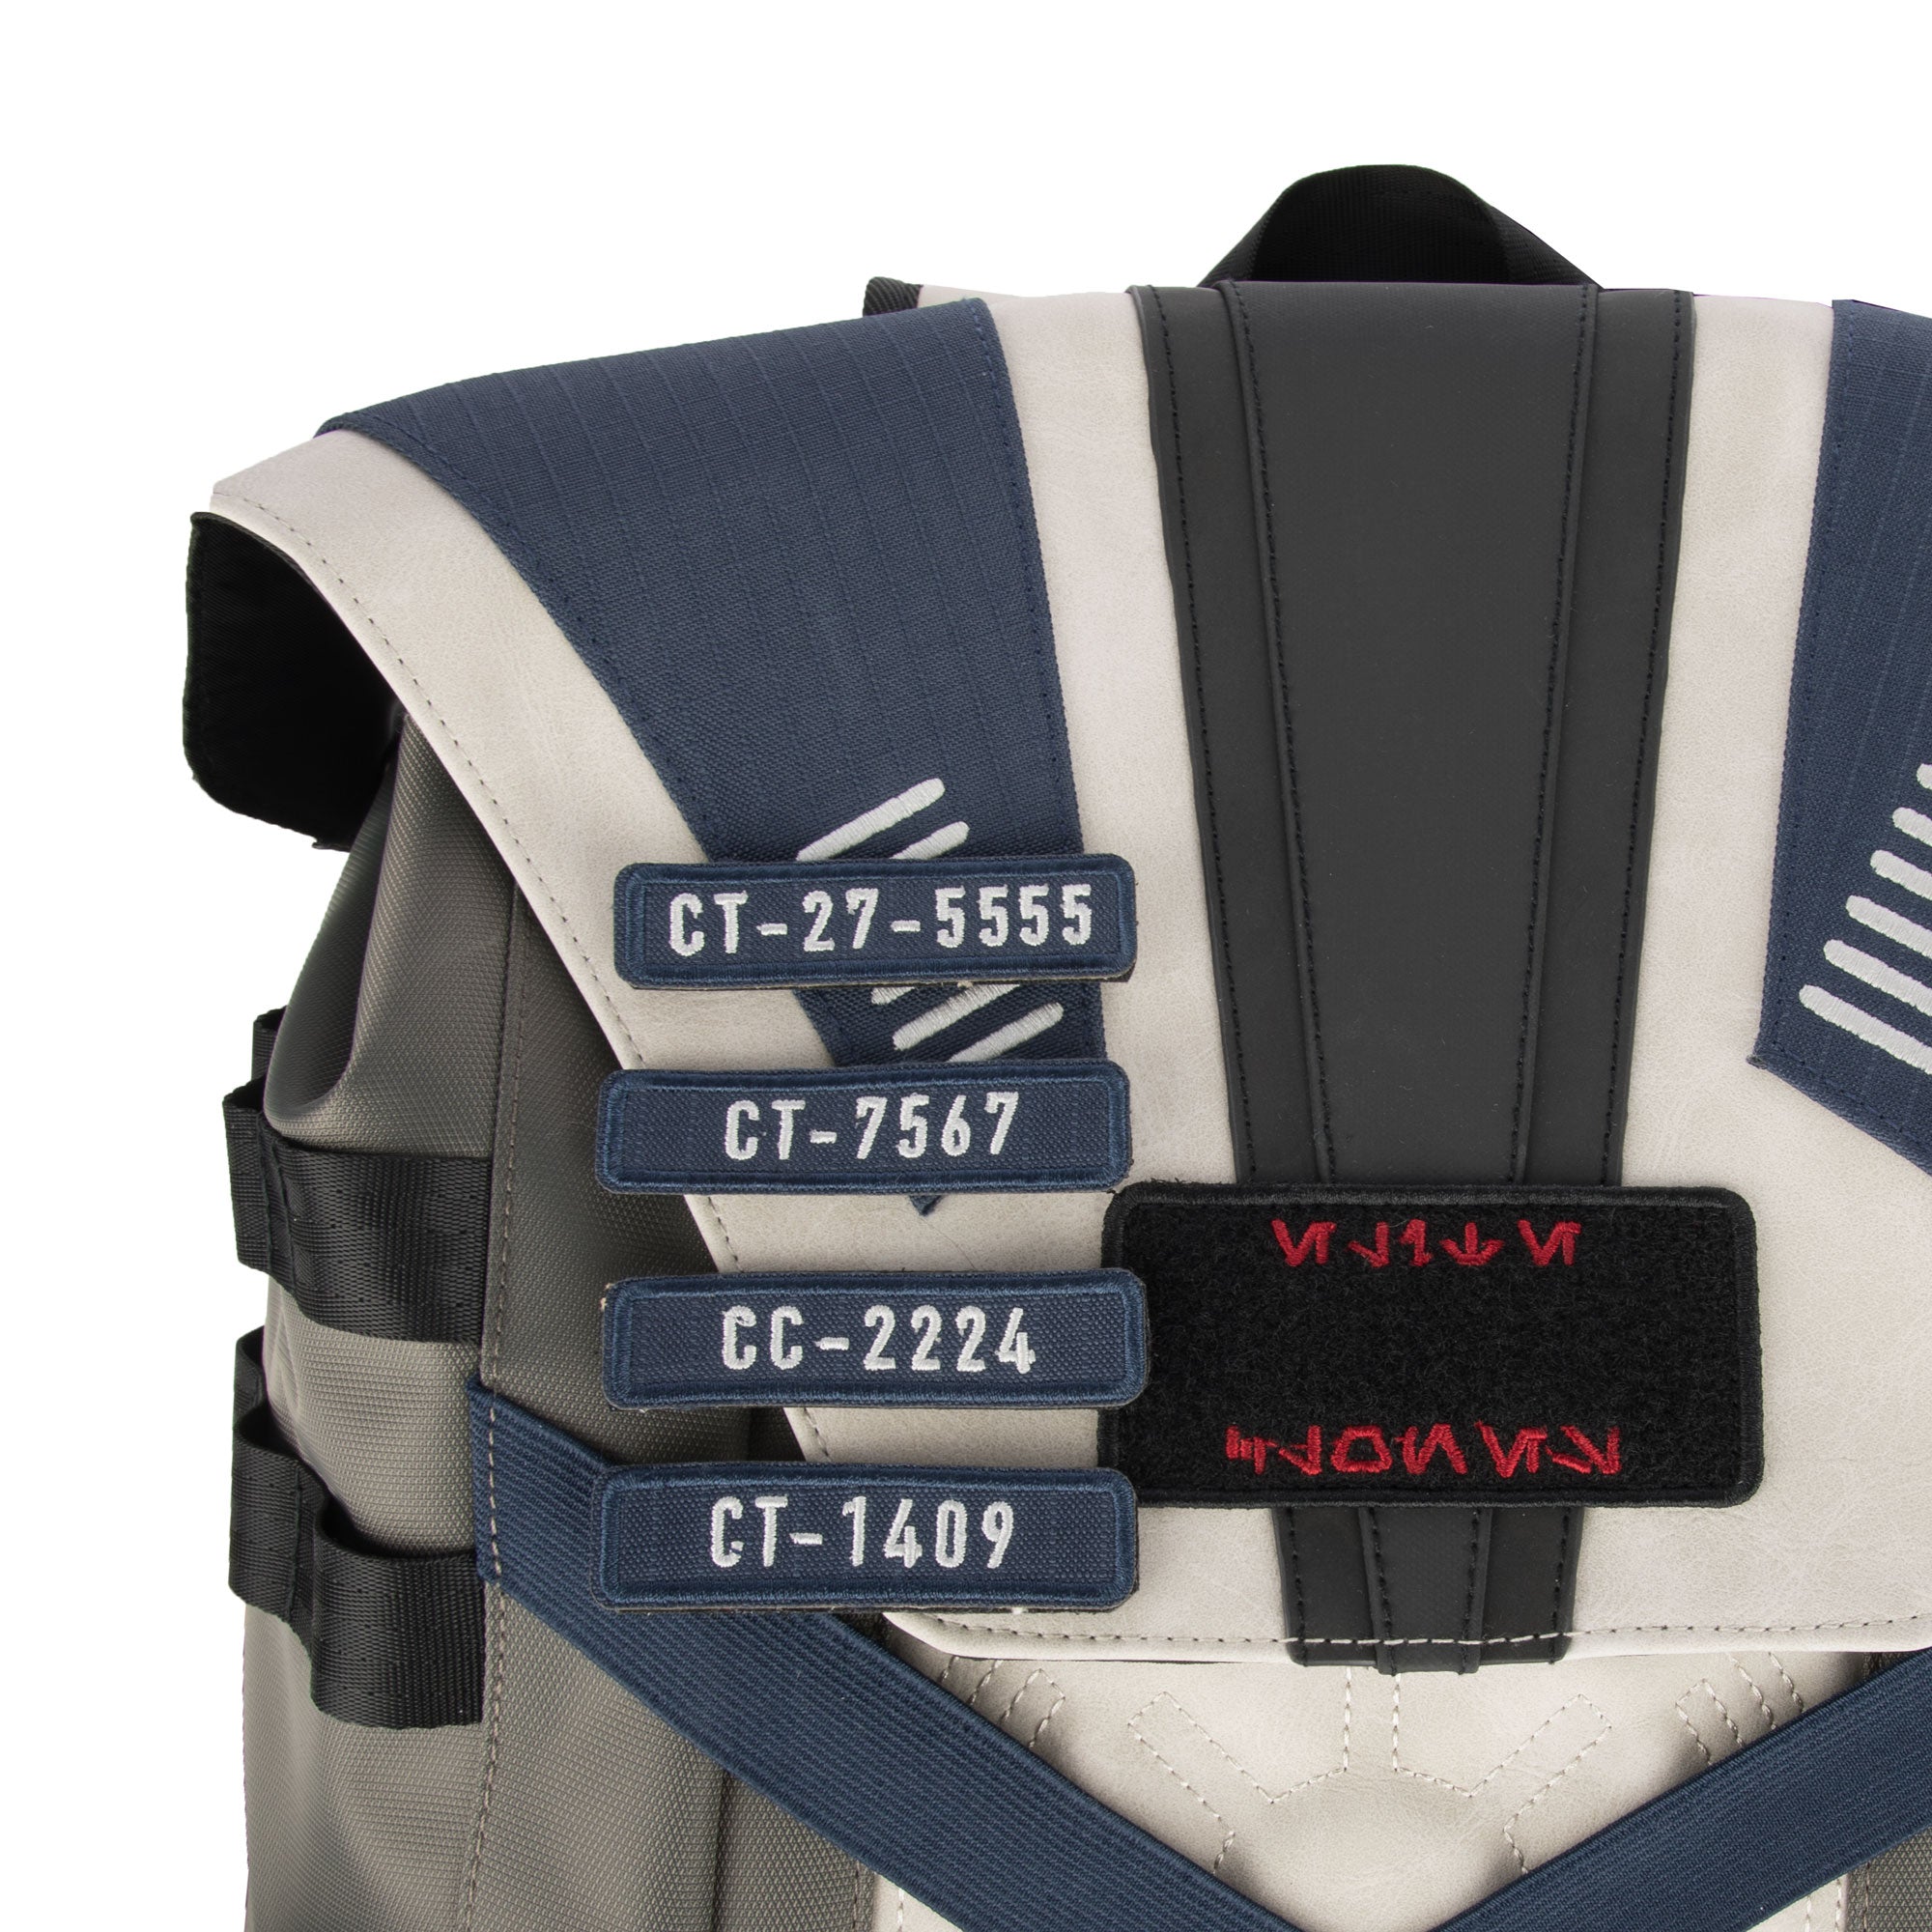 Grand Army Trooper Tech Backpack